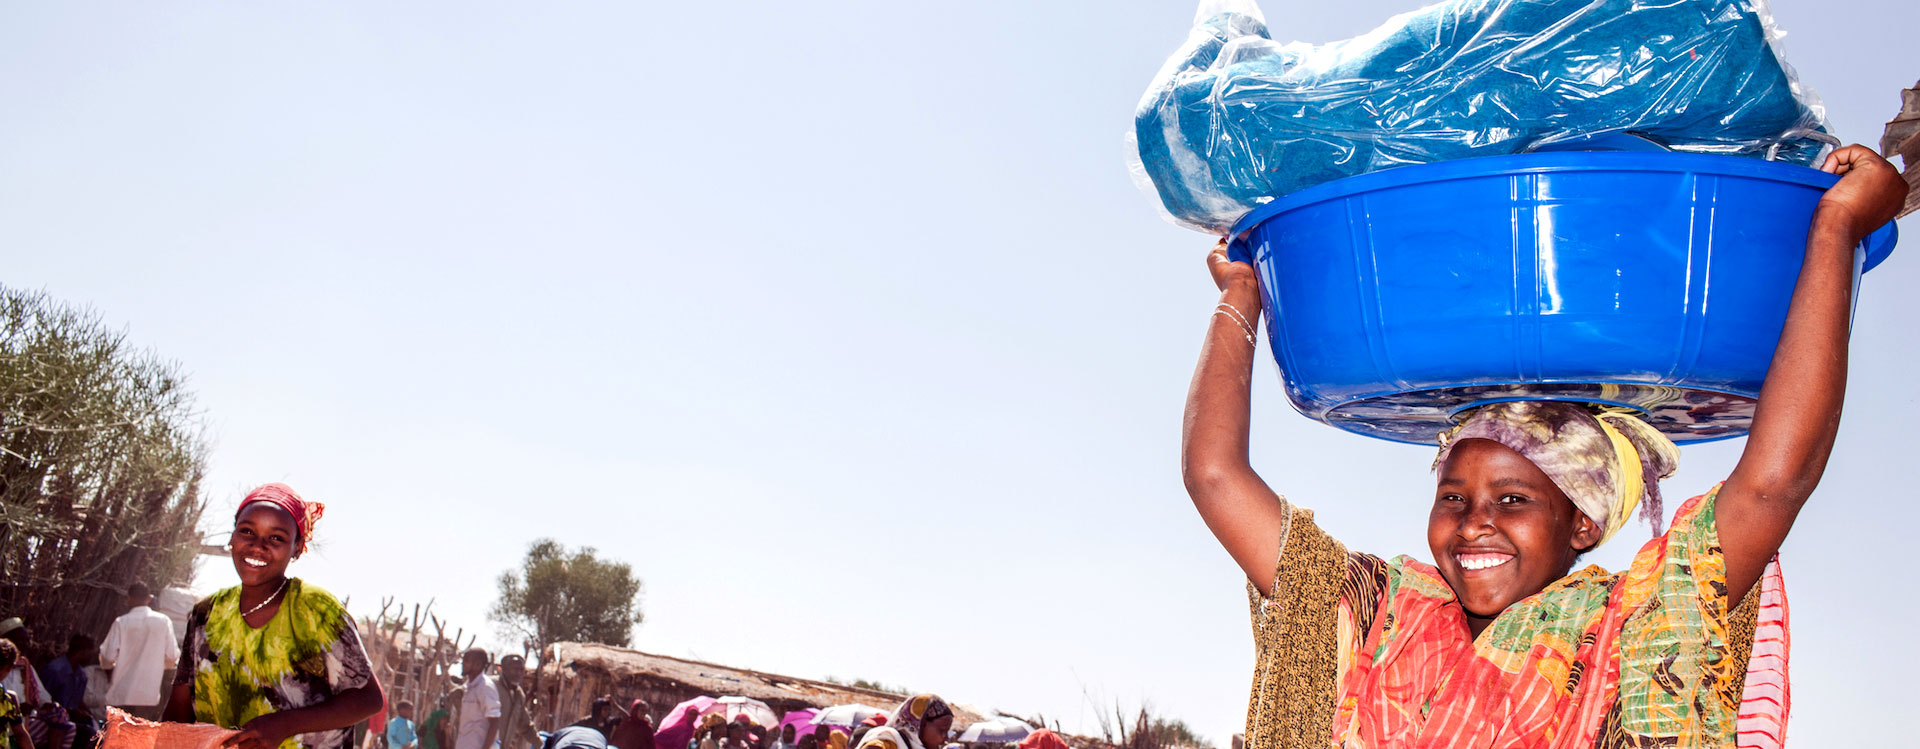 Emergency aid during drought in Borana, Ethiopia